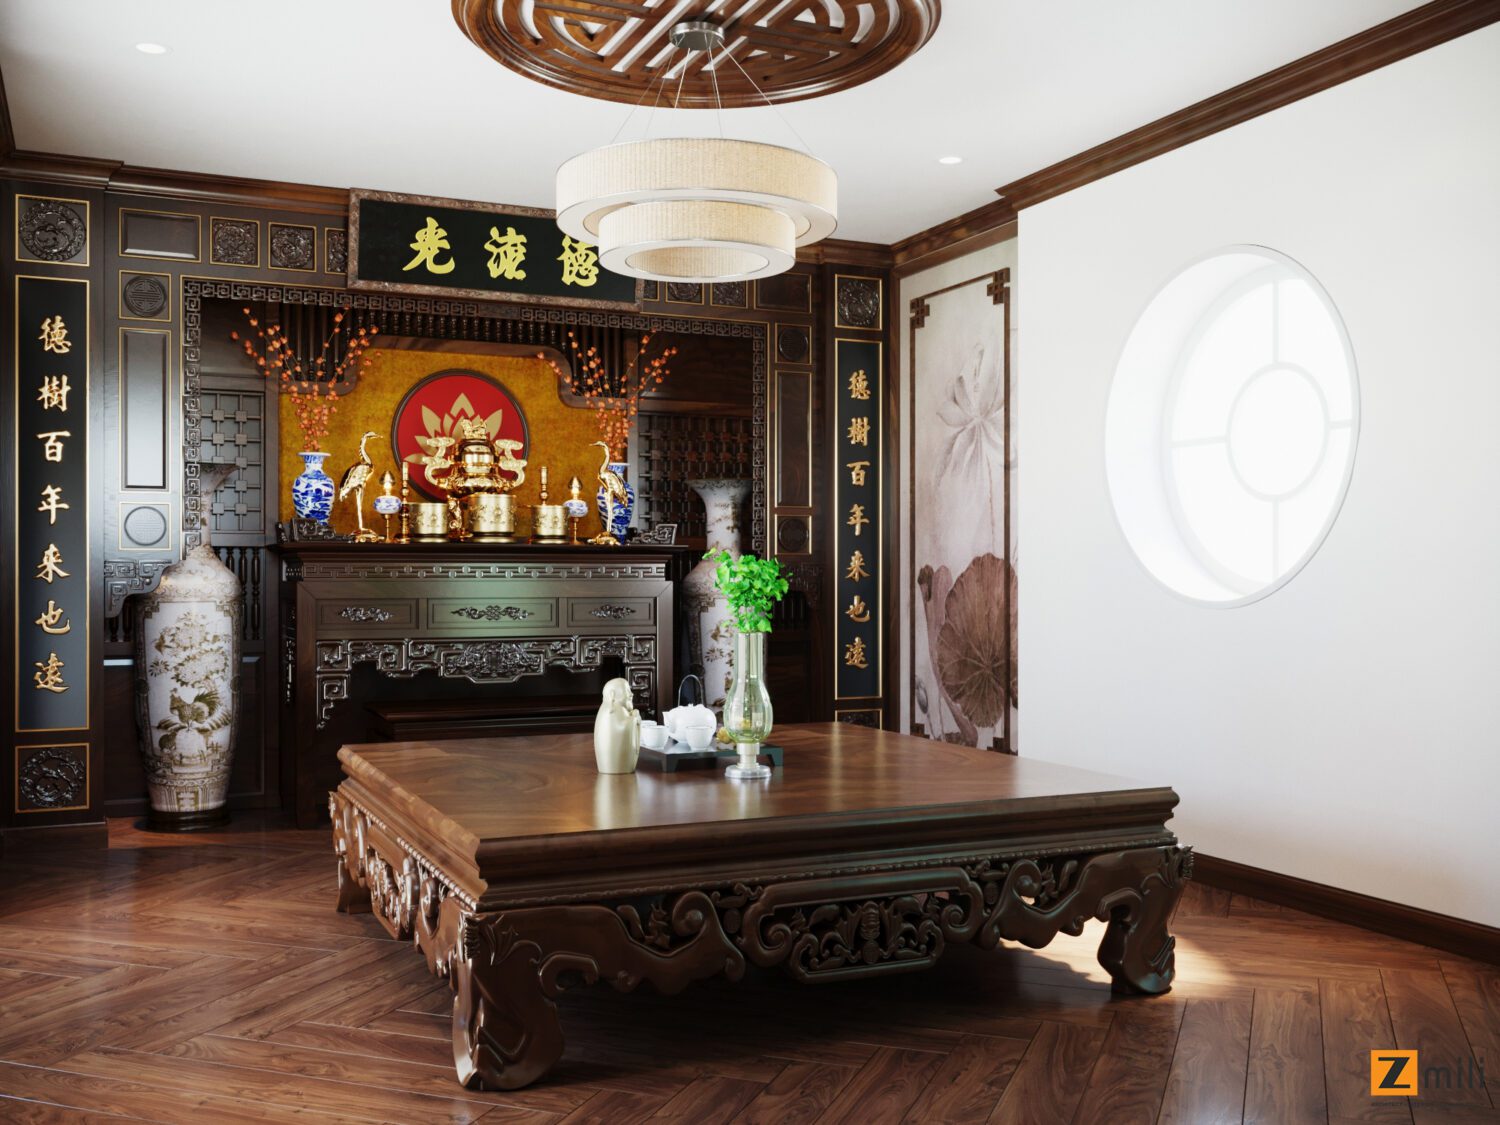 13162. Free 3D Altar Room Interior Model Download by Tran Hoang Nghia